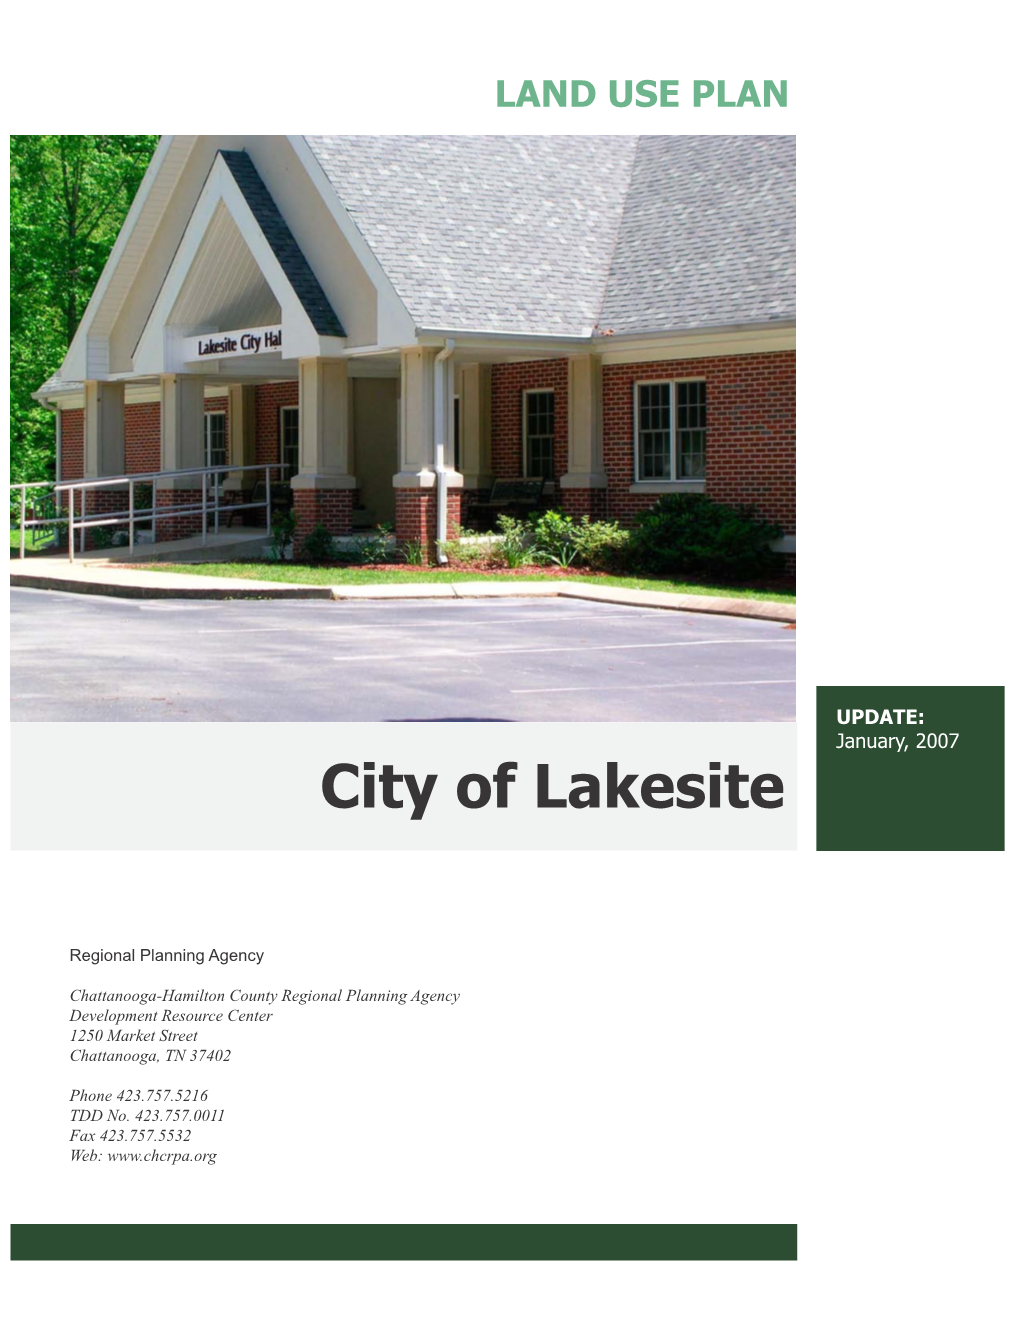 City of Lakesite